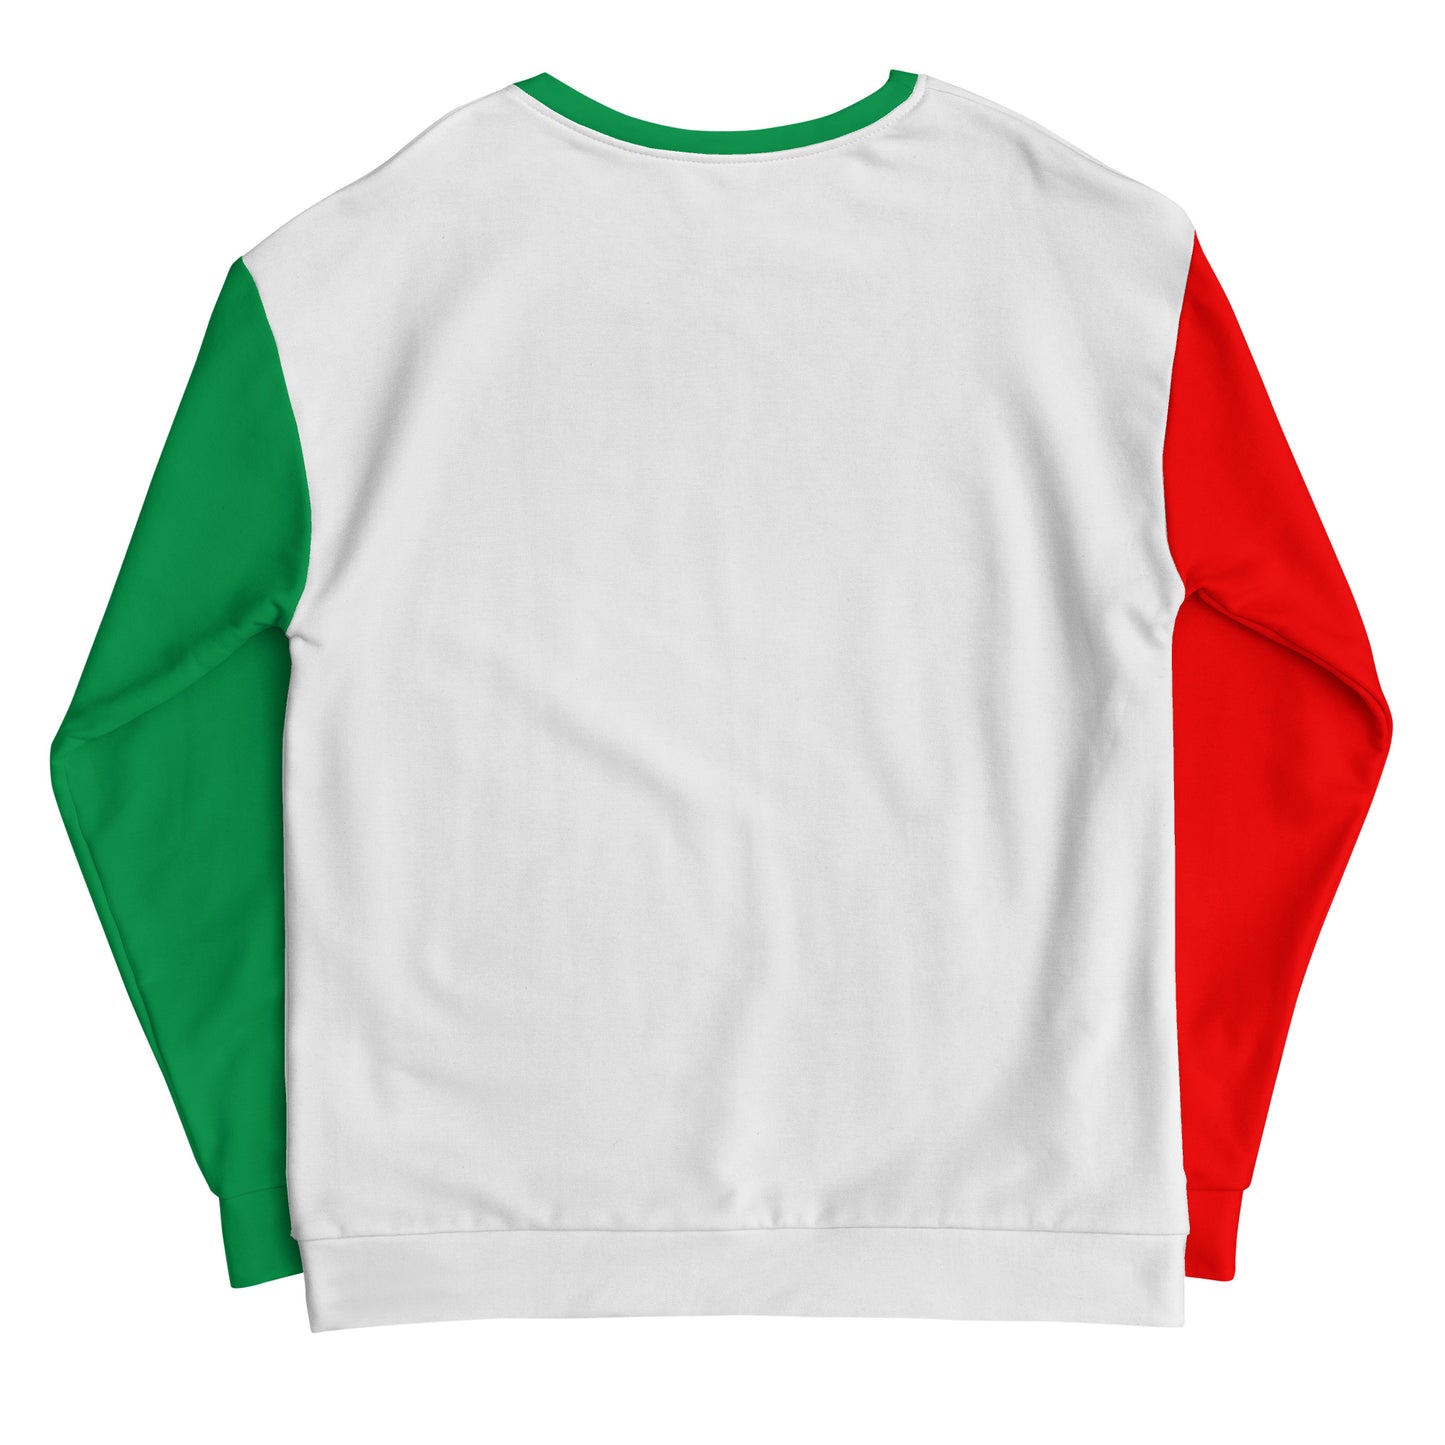 Italy Flag - Sustainably Made Sweatshirt